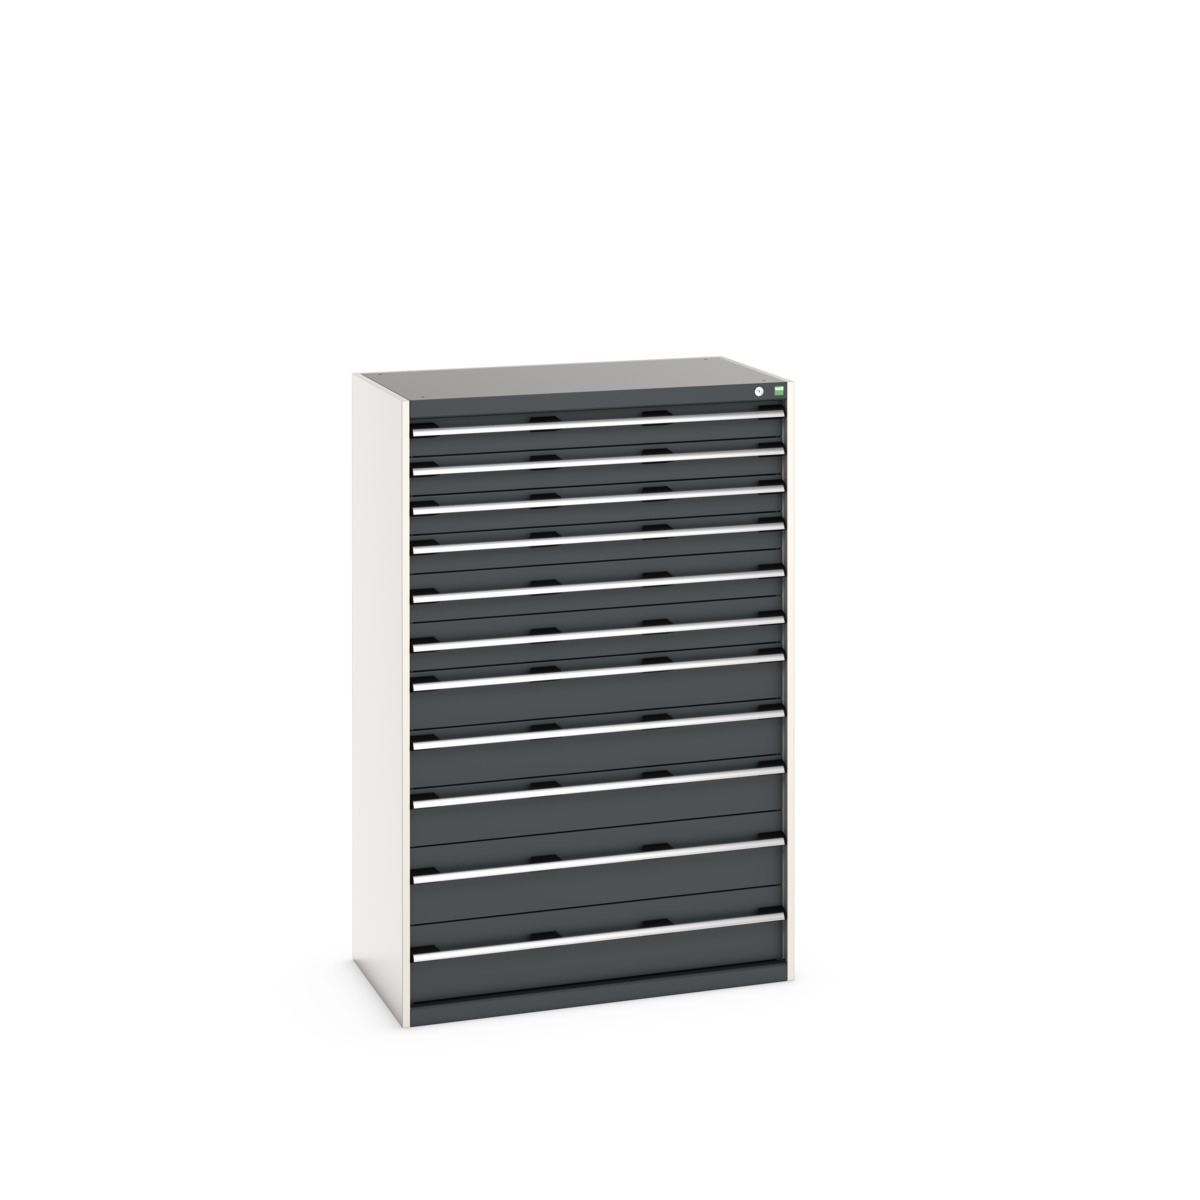 40021046. - cubio drawer cabinet